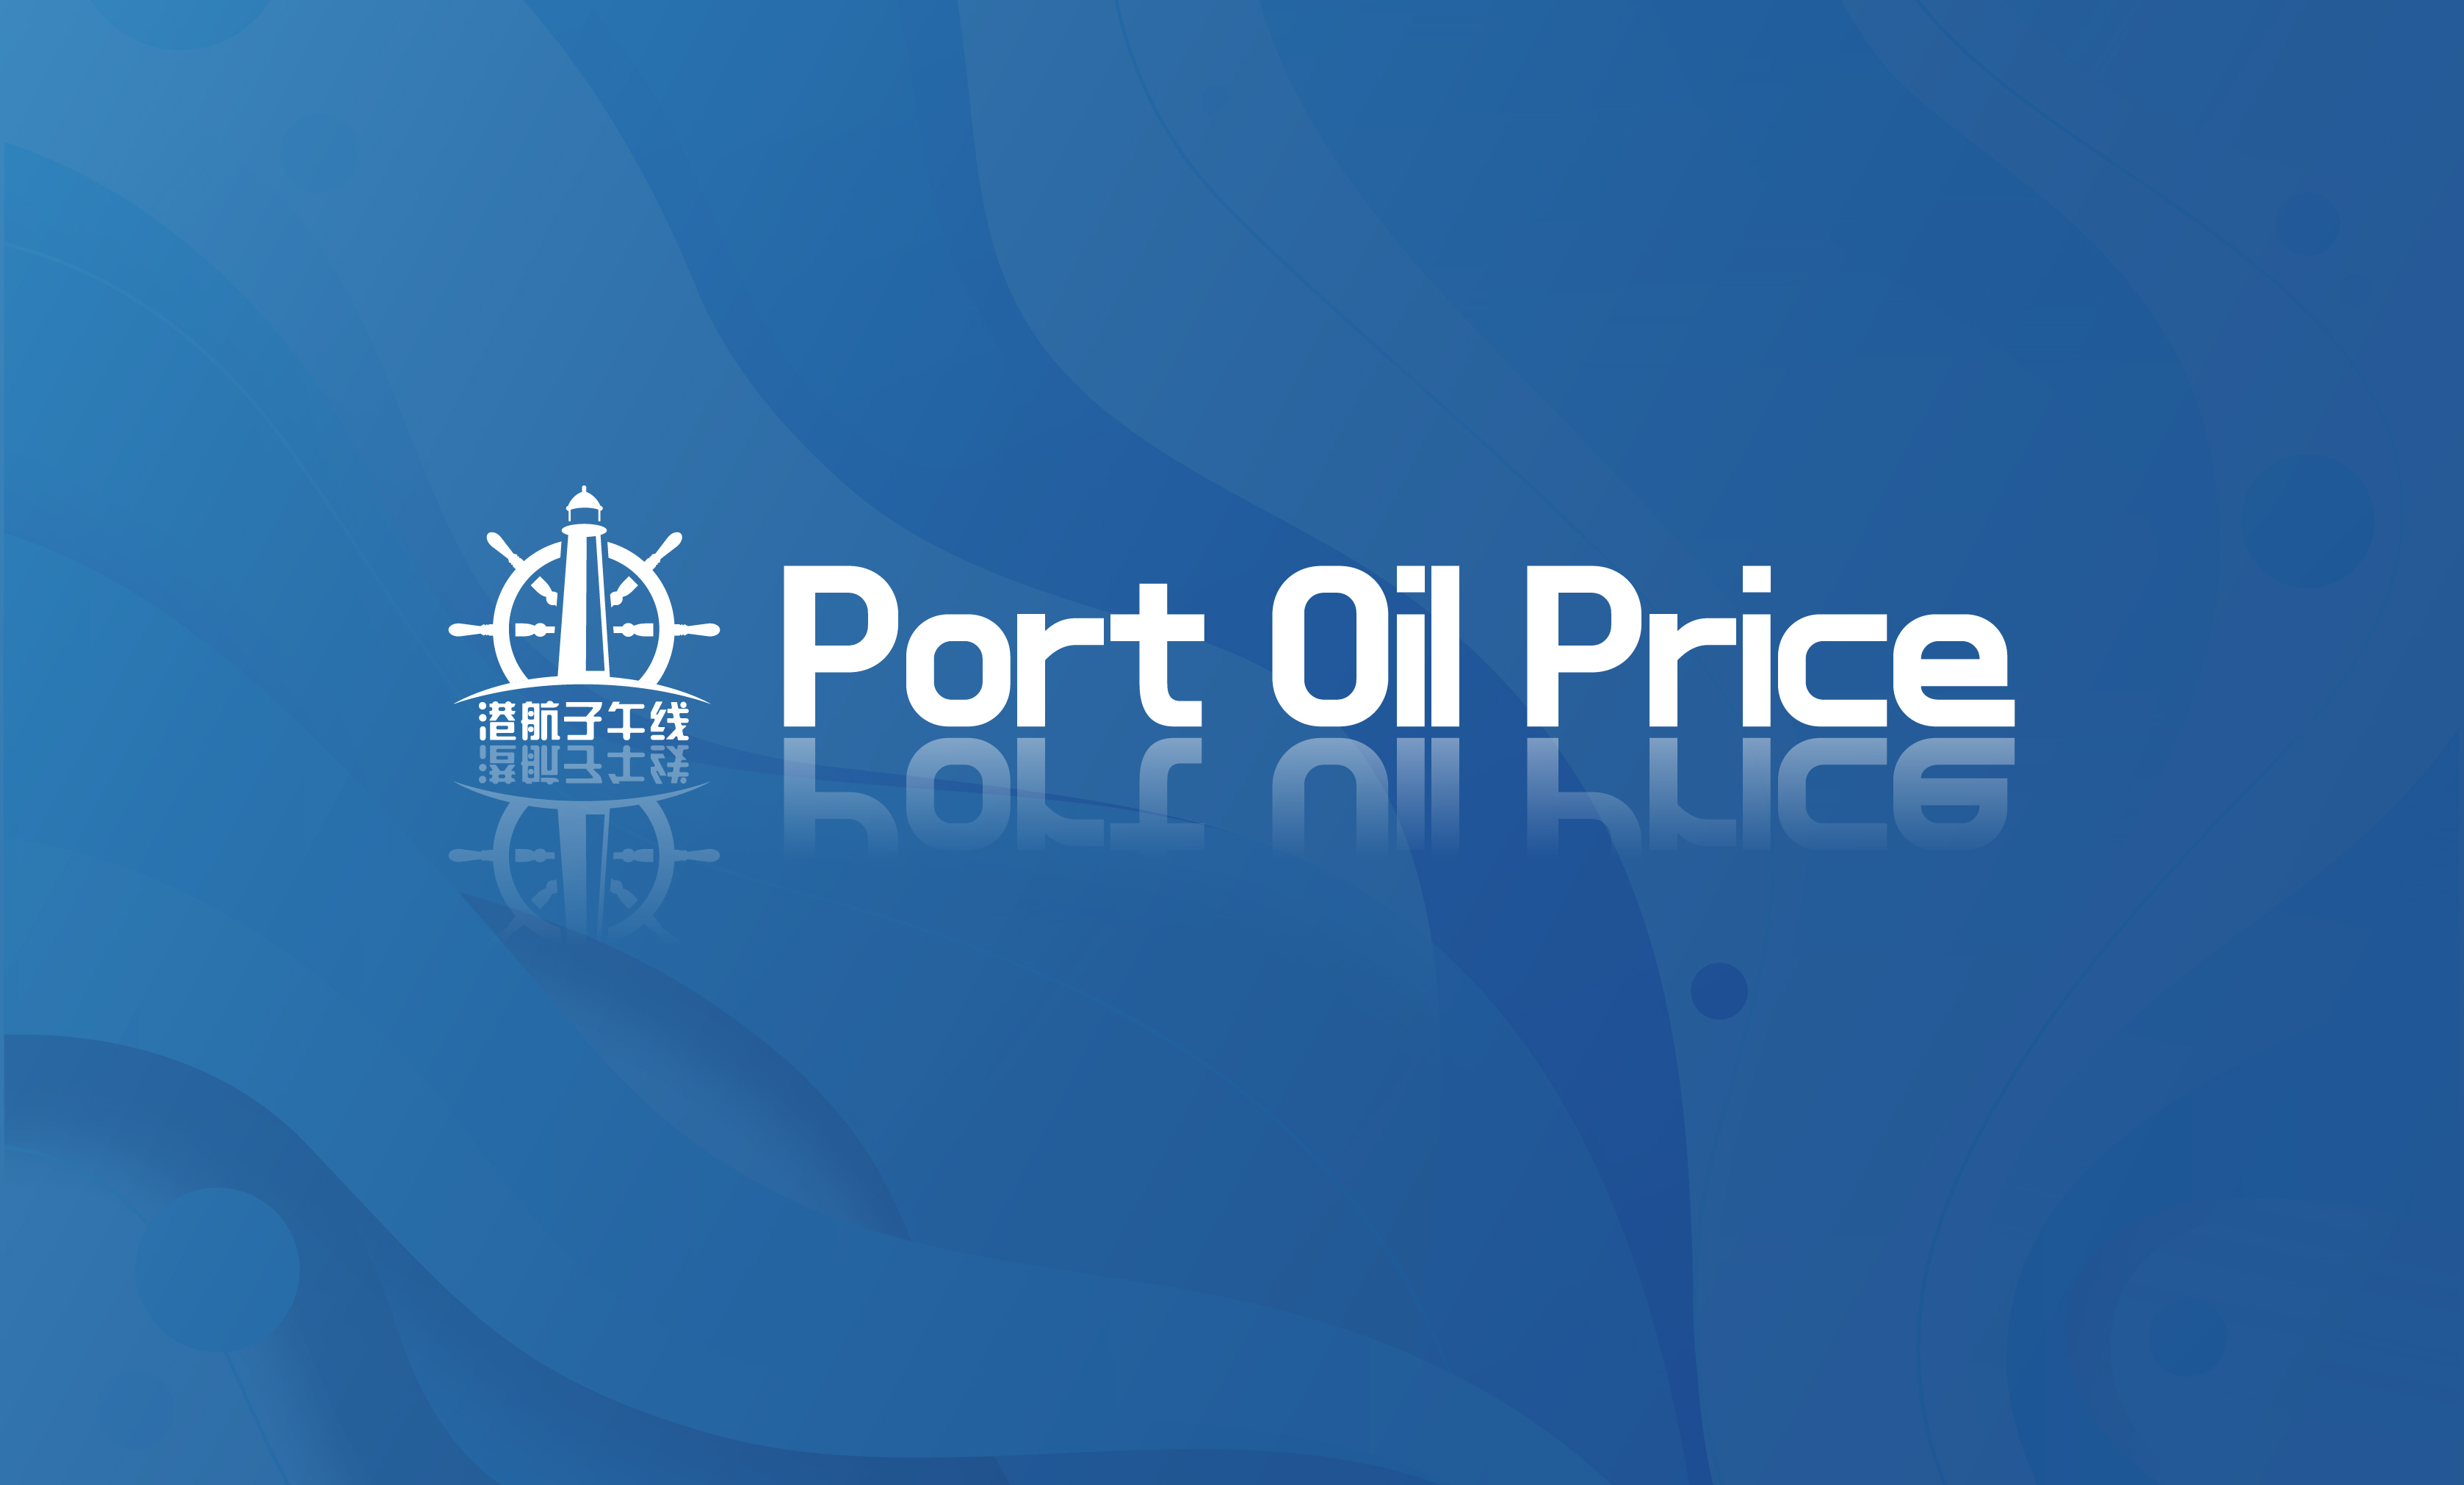 7/24 Oil Price for Global Popular Ports